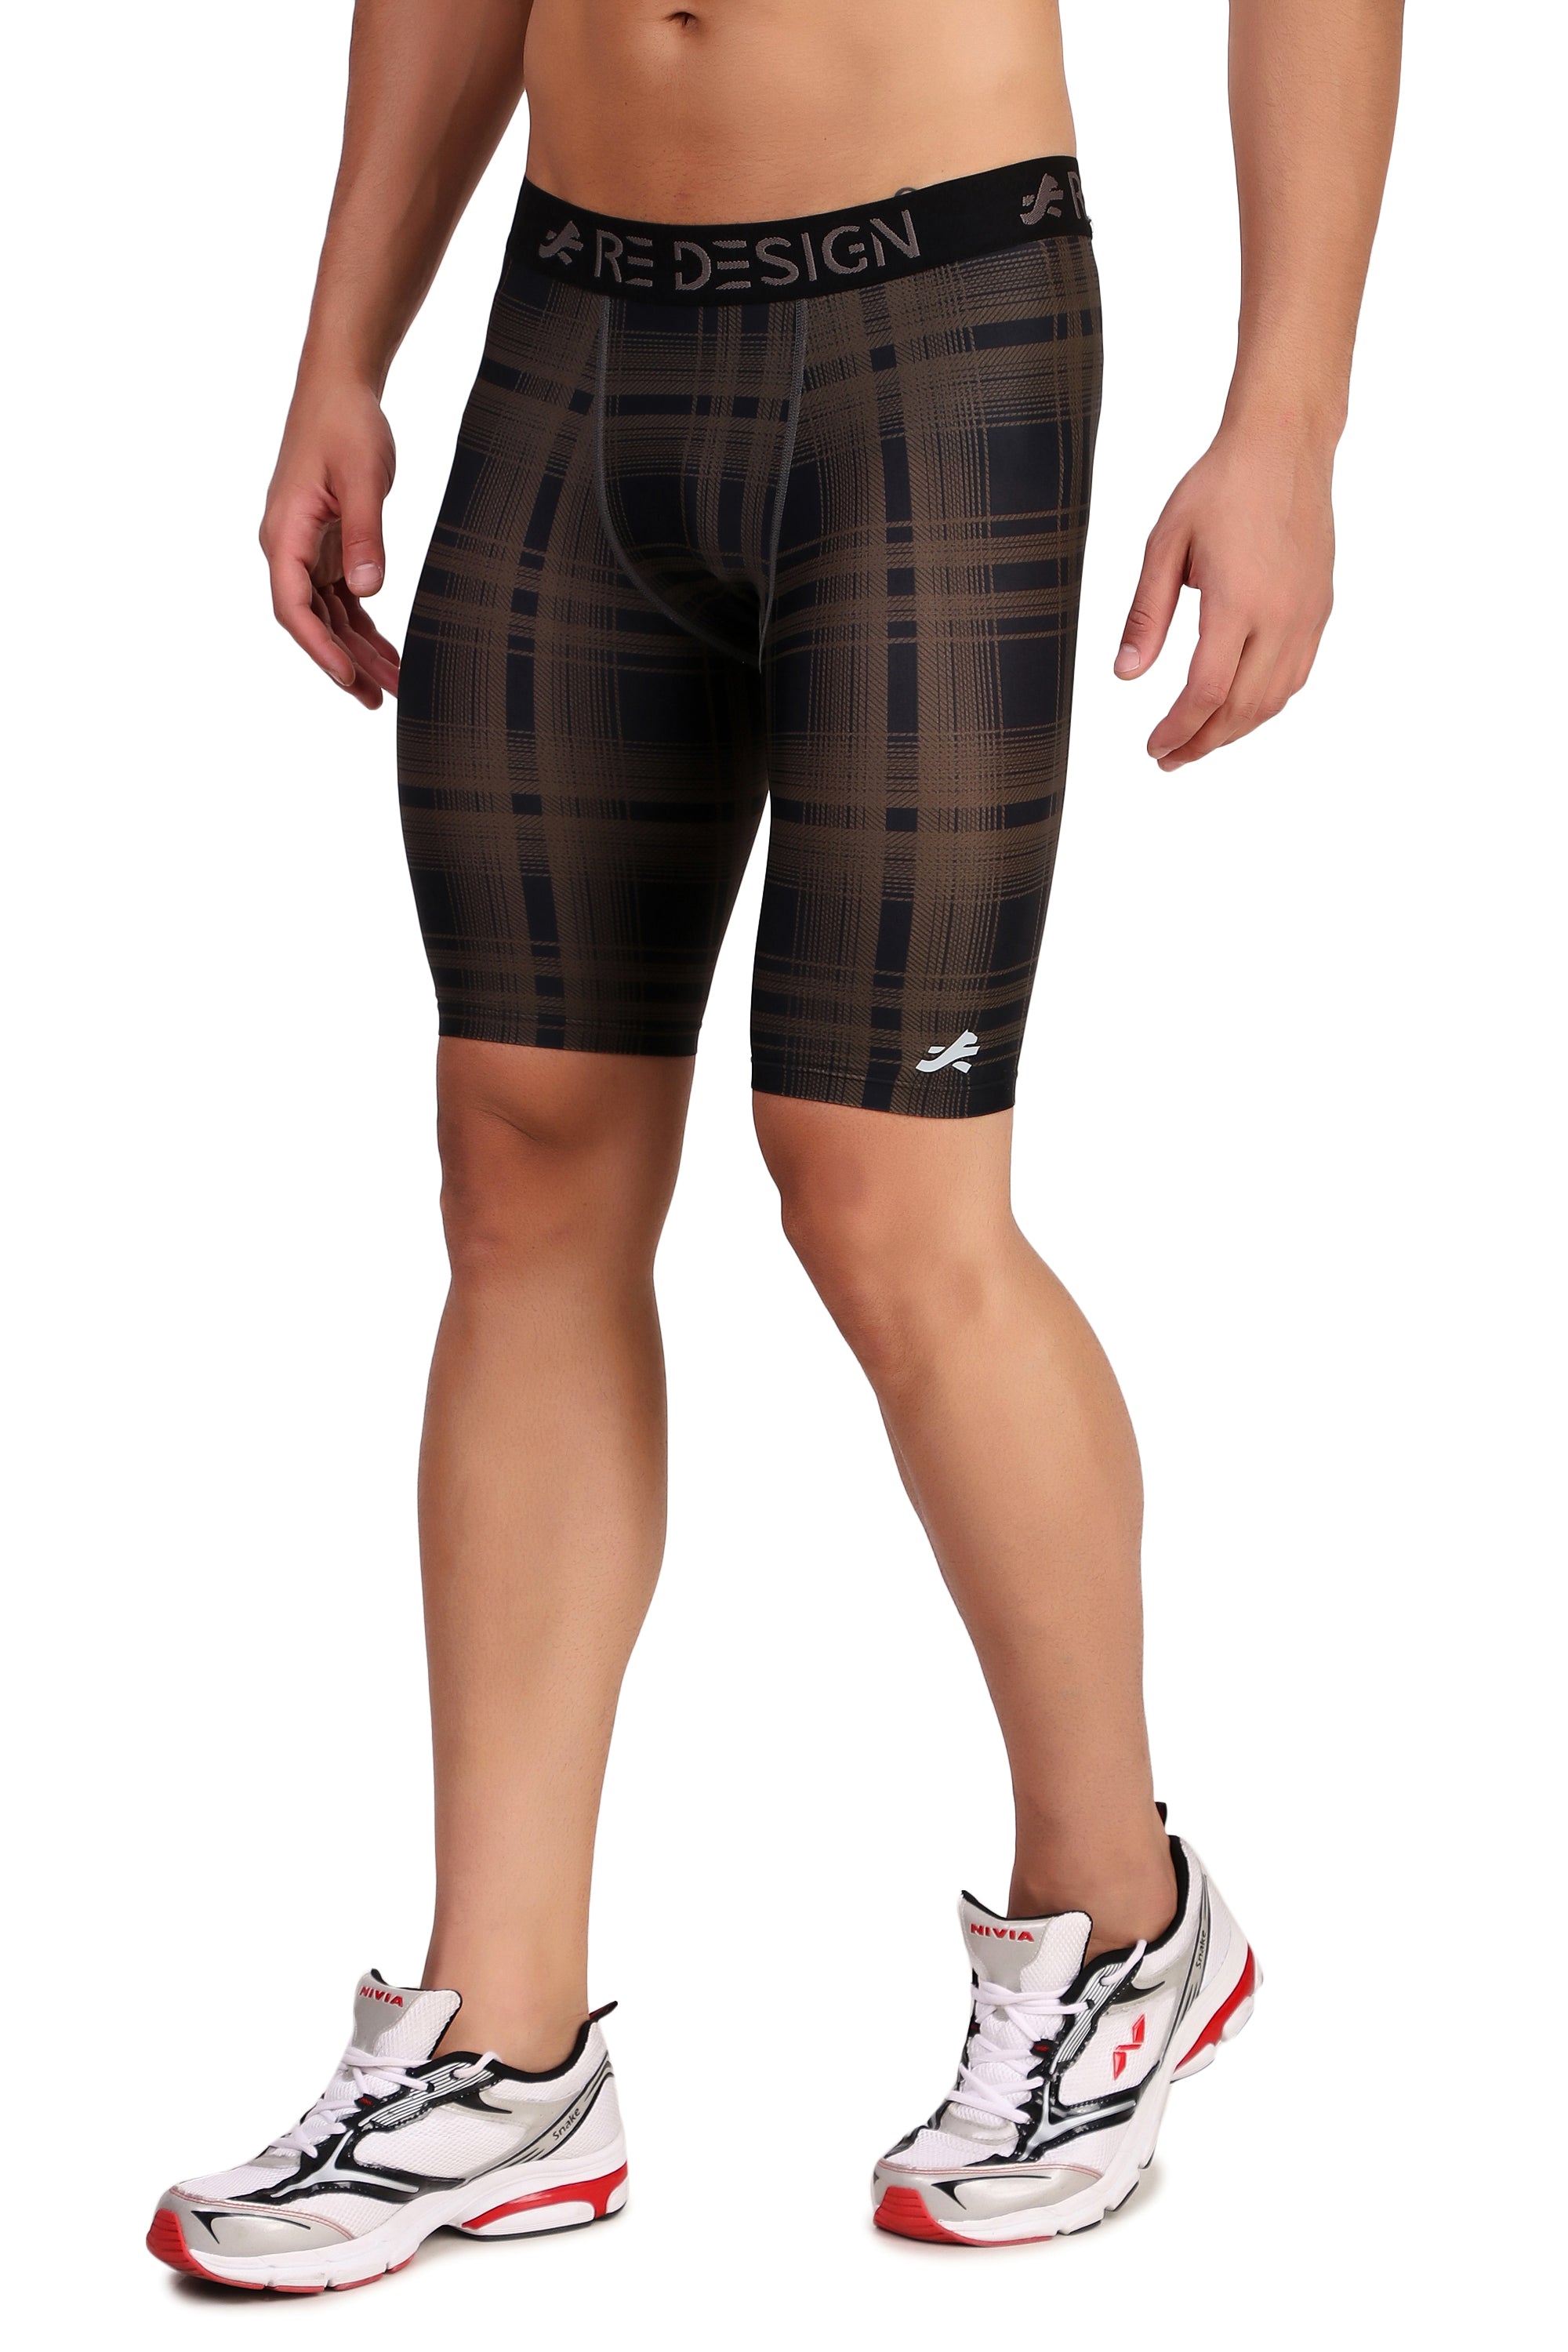 Men's Nylon Compression Shorts and Half Tights (Plade)